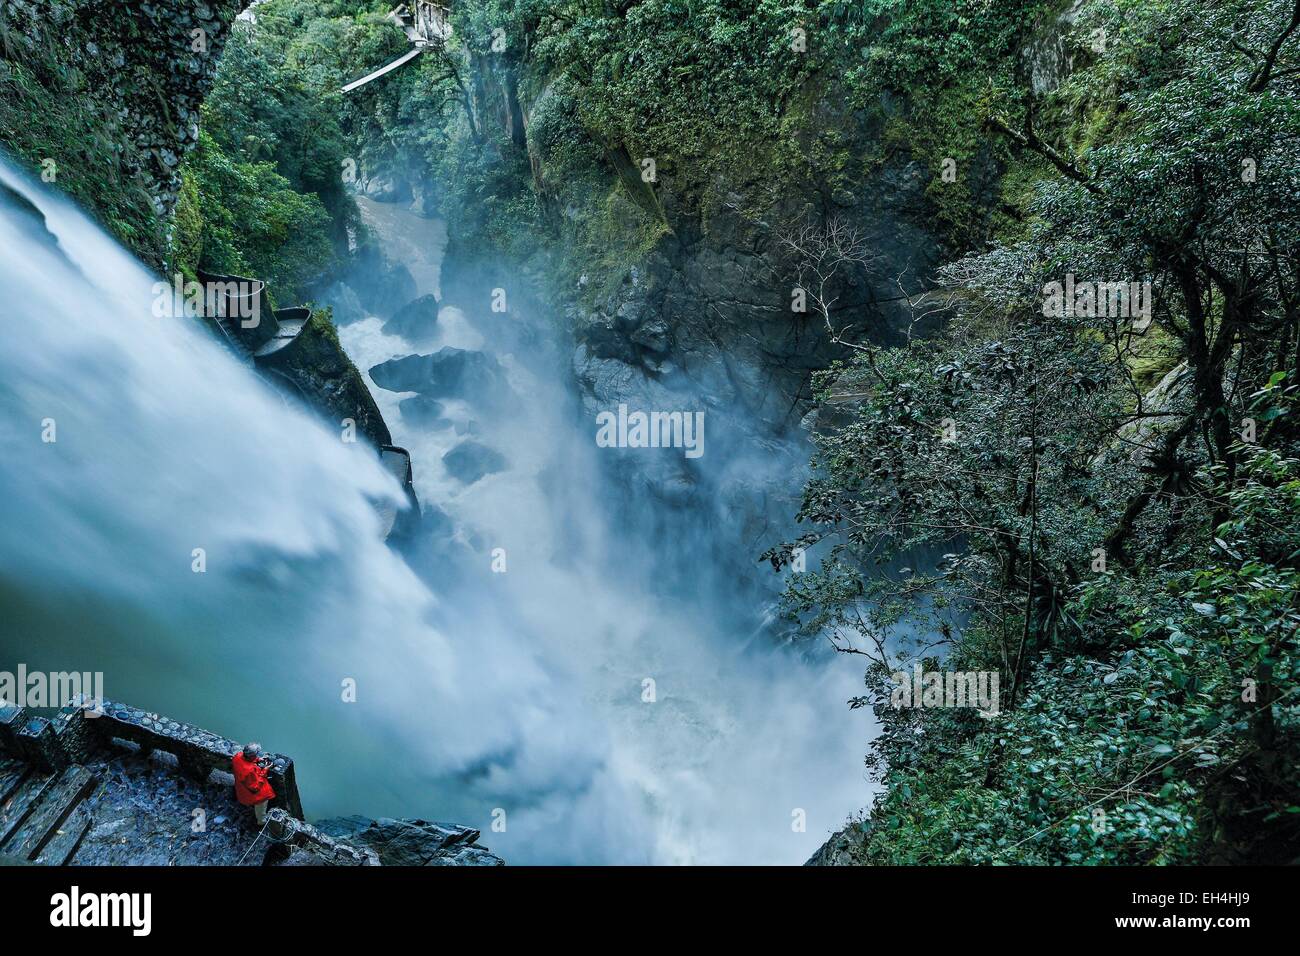 Ecuador, Tungurahua, Banos de Agua Santa, Pailon del Diablo, tourist at the foot of a waterfall in grooves in a tropical greenery Stock Photo